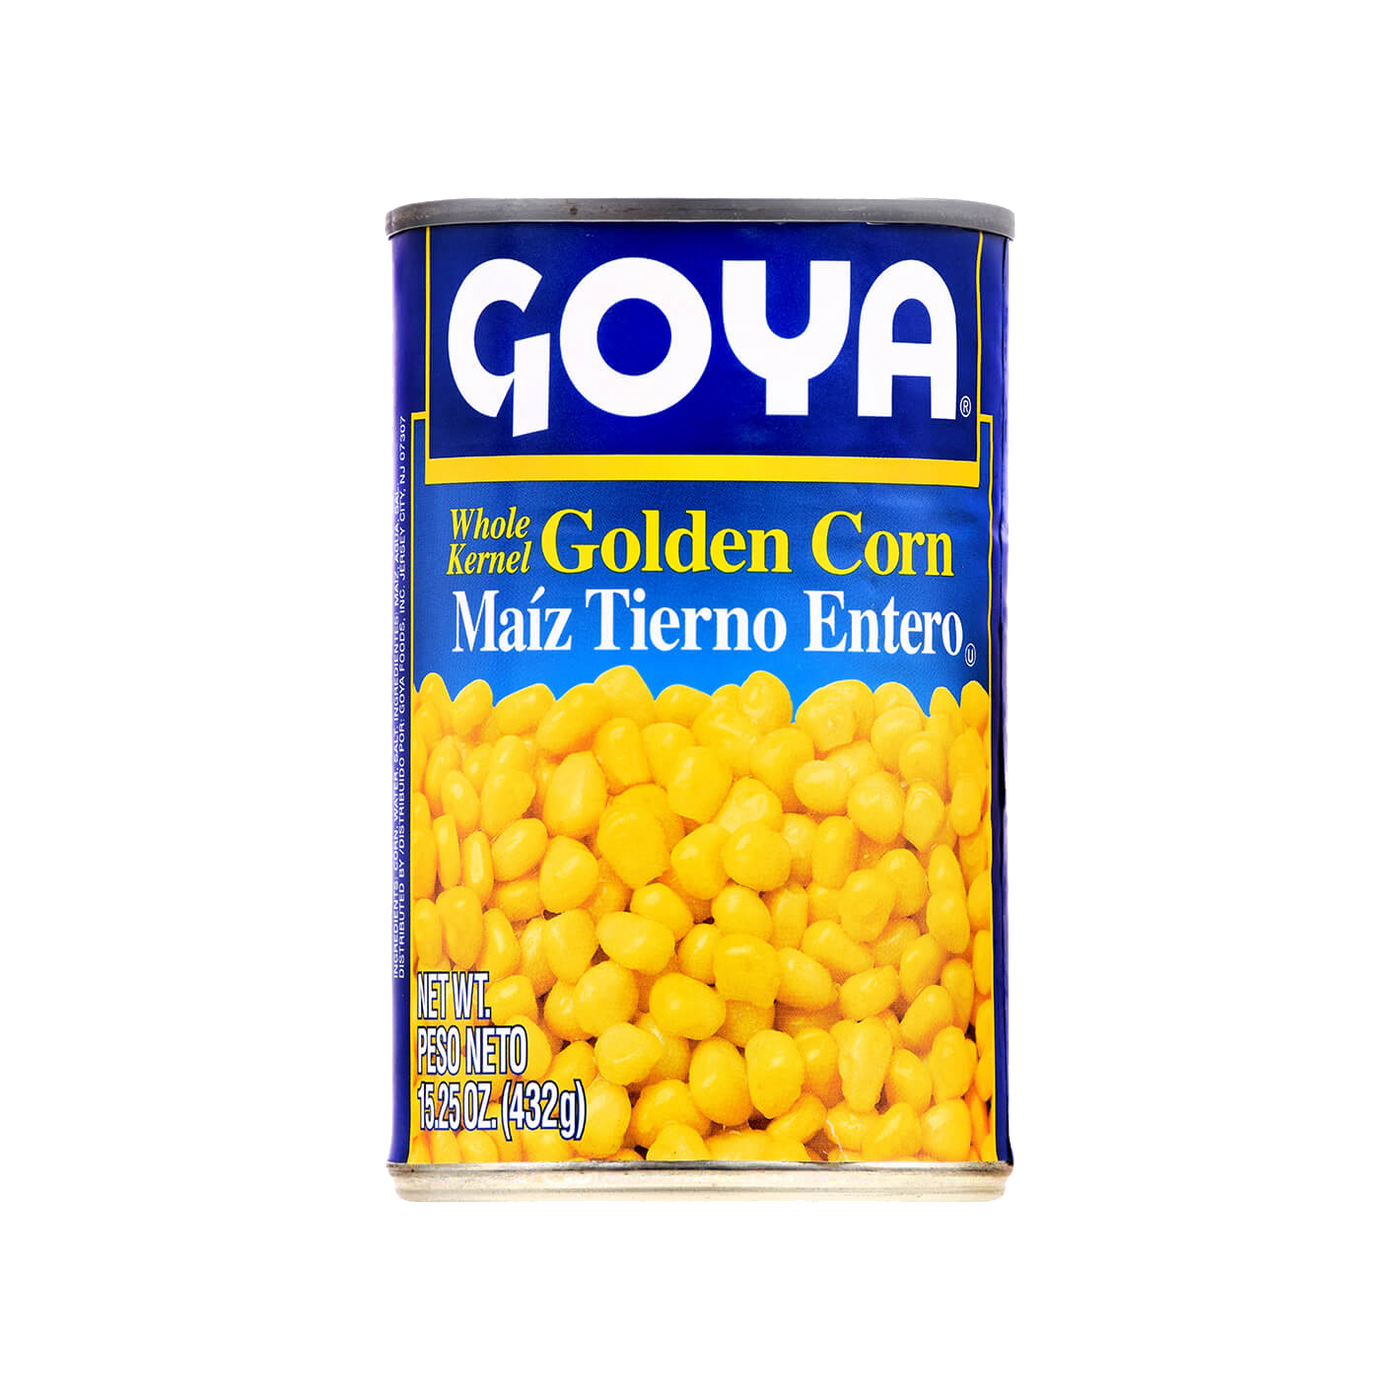   Goya Whole Kernel Golden Corn